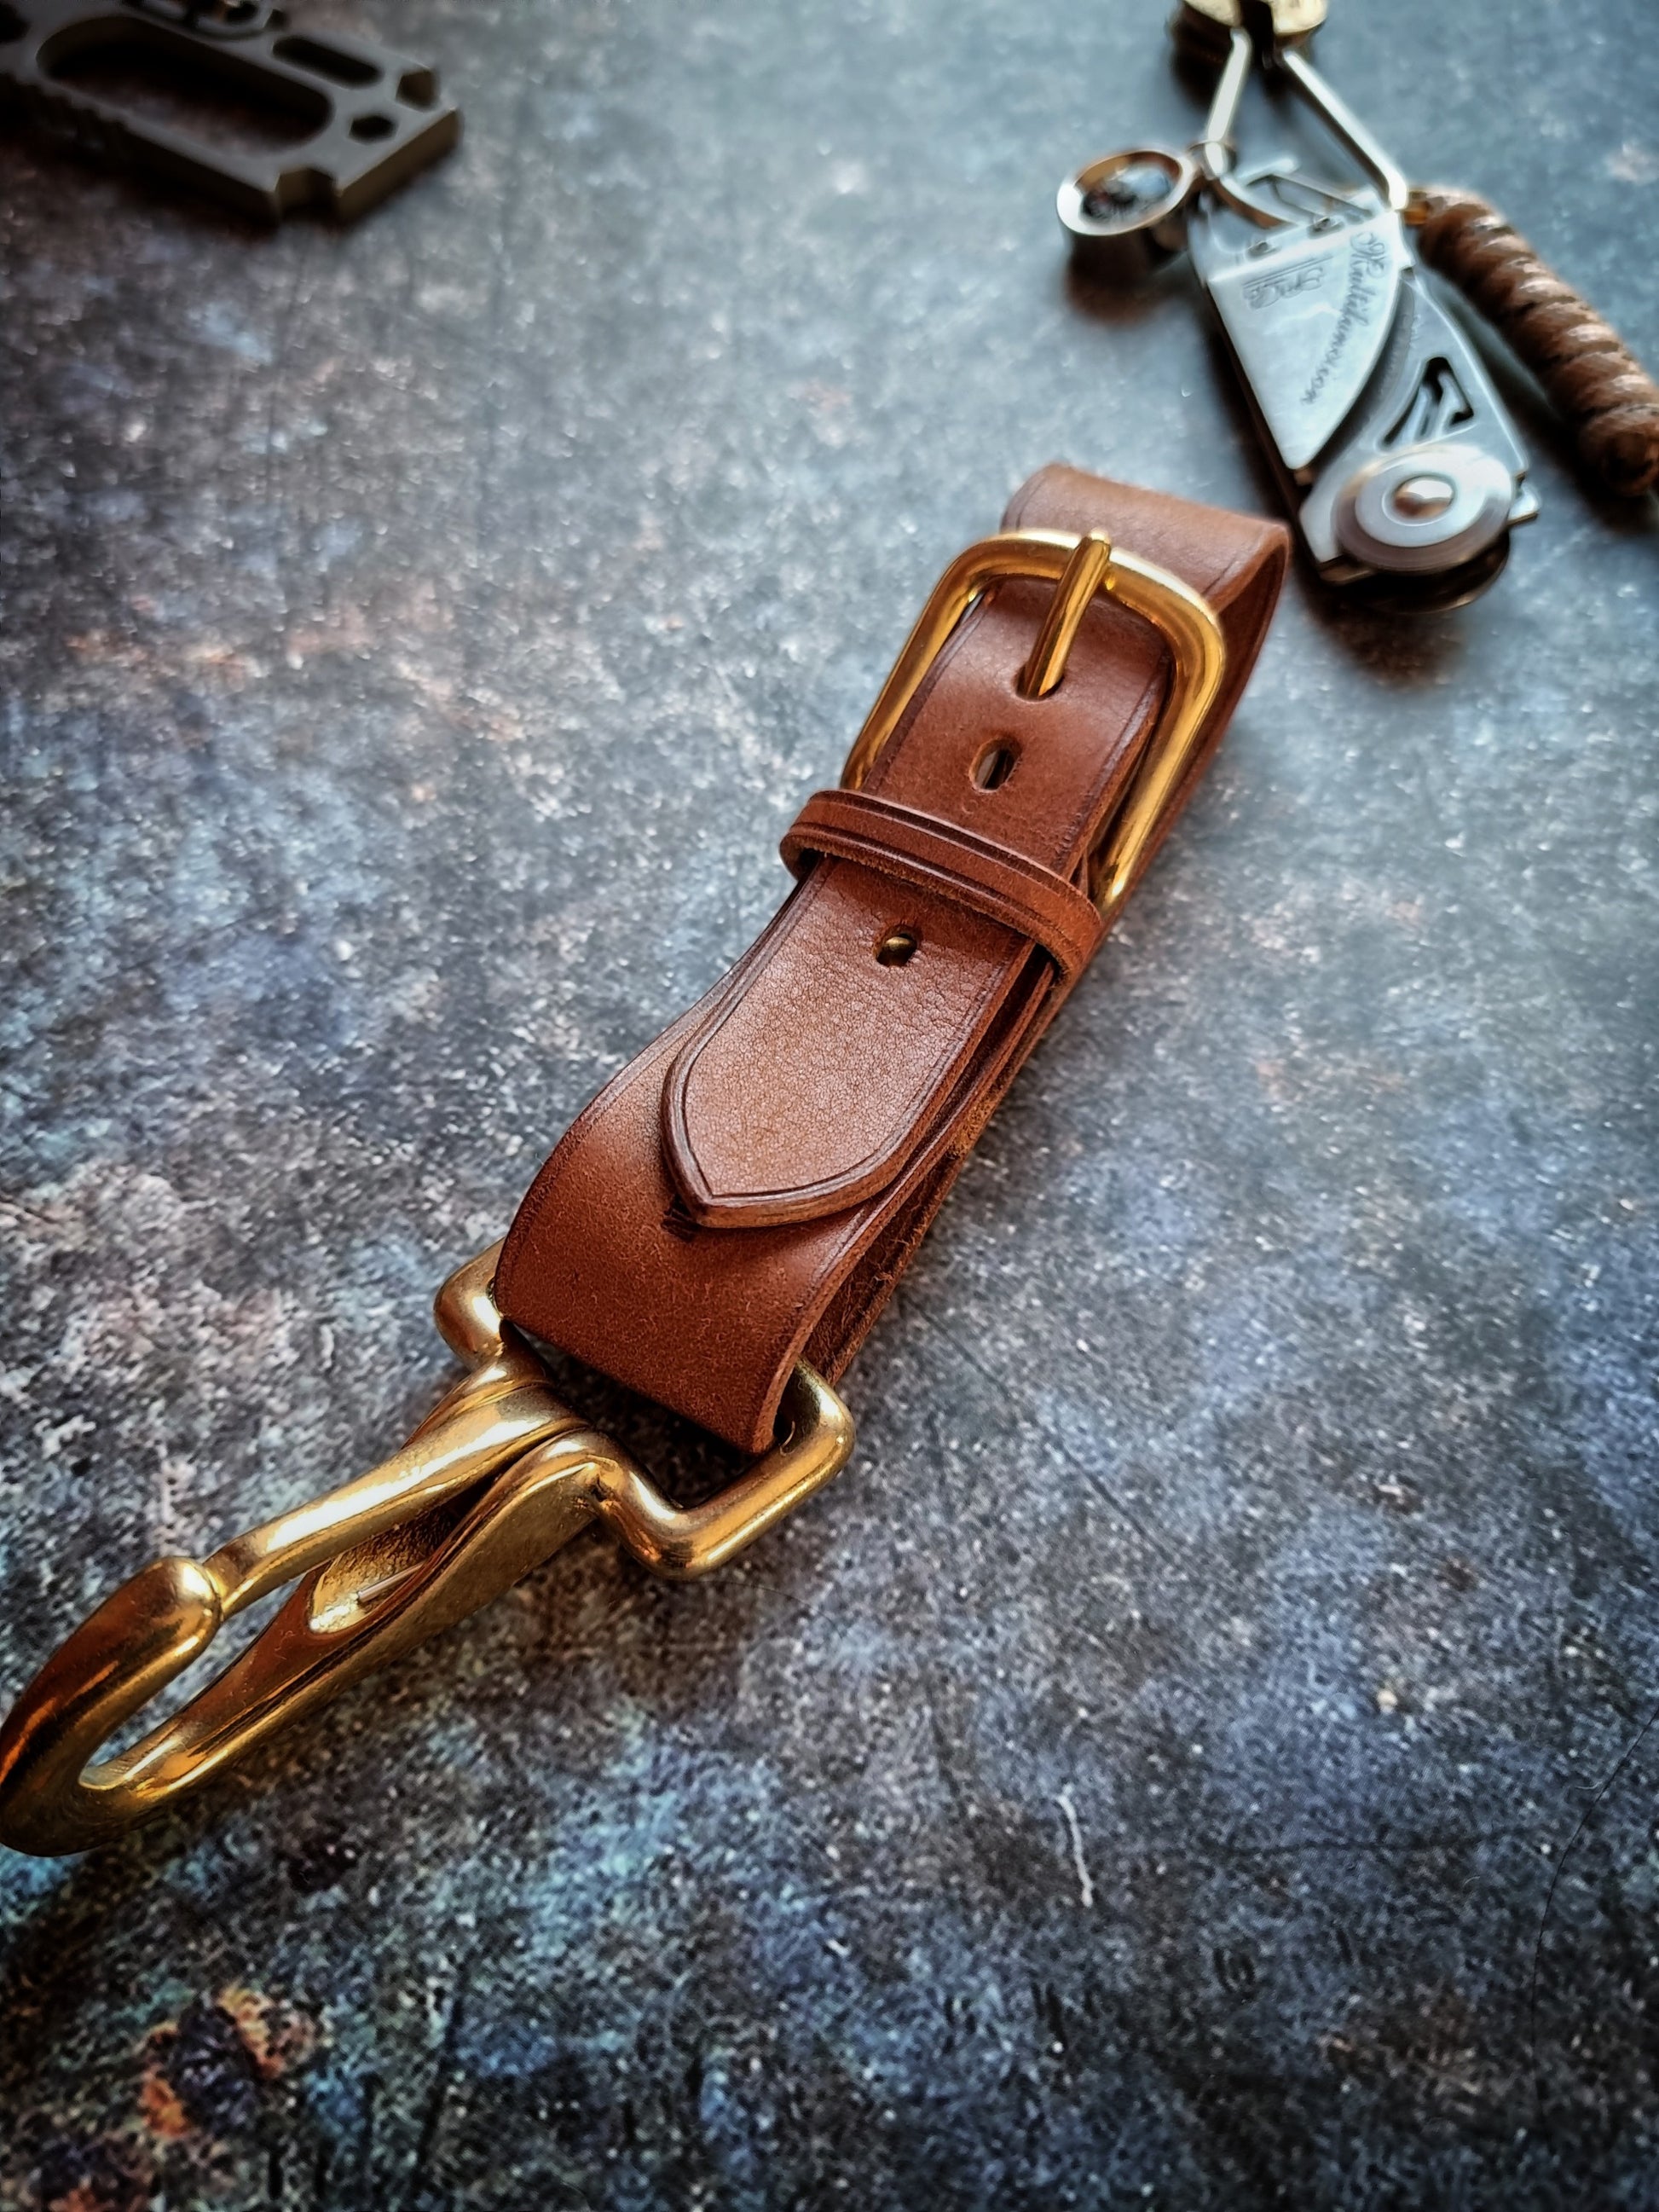 belt hook - buckle design